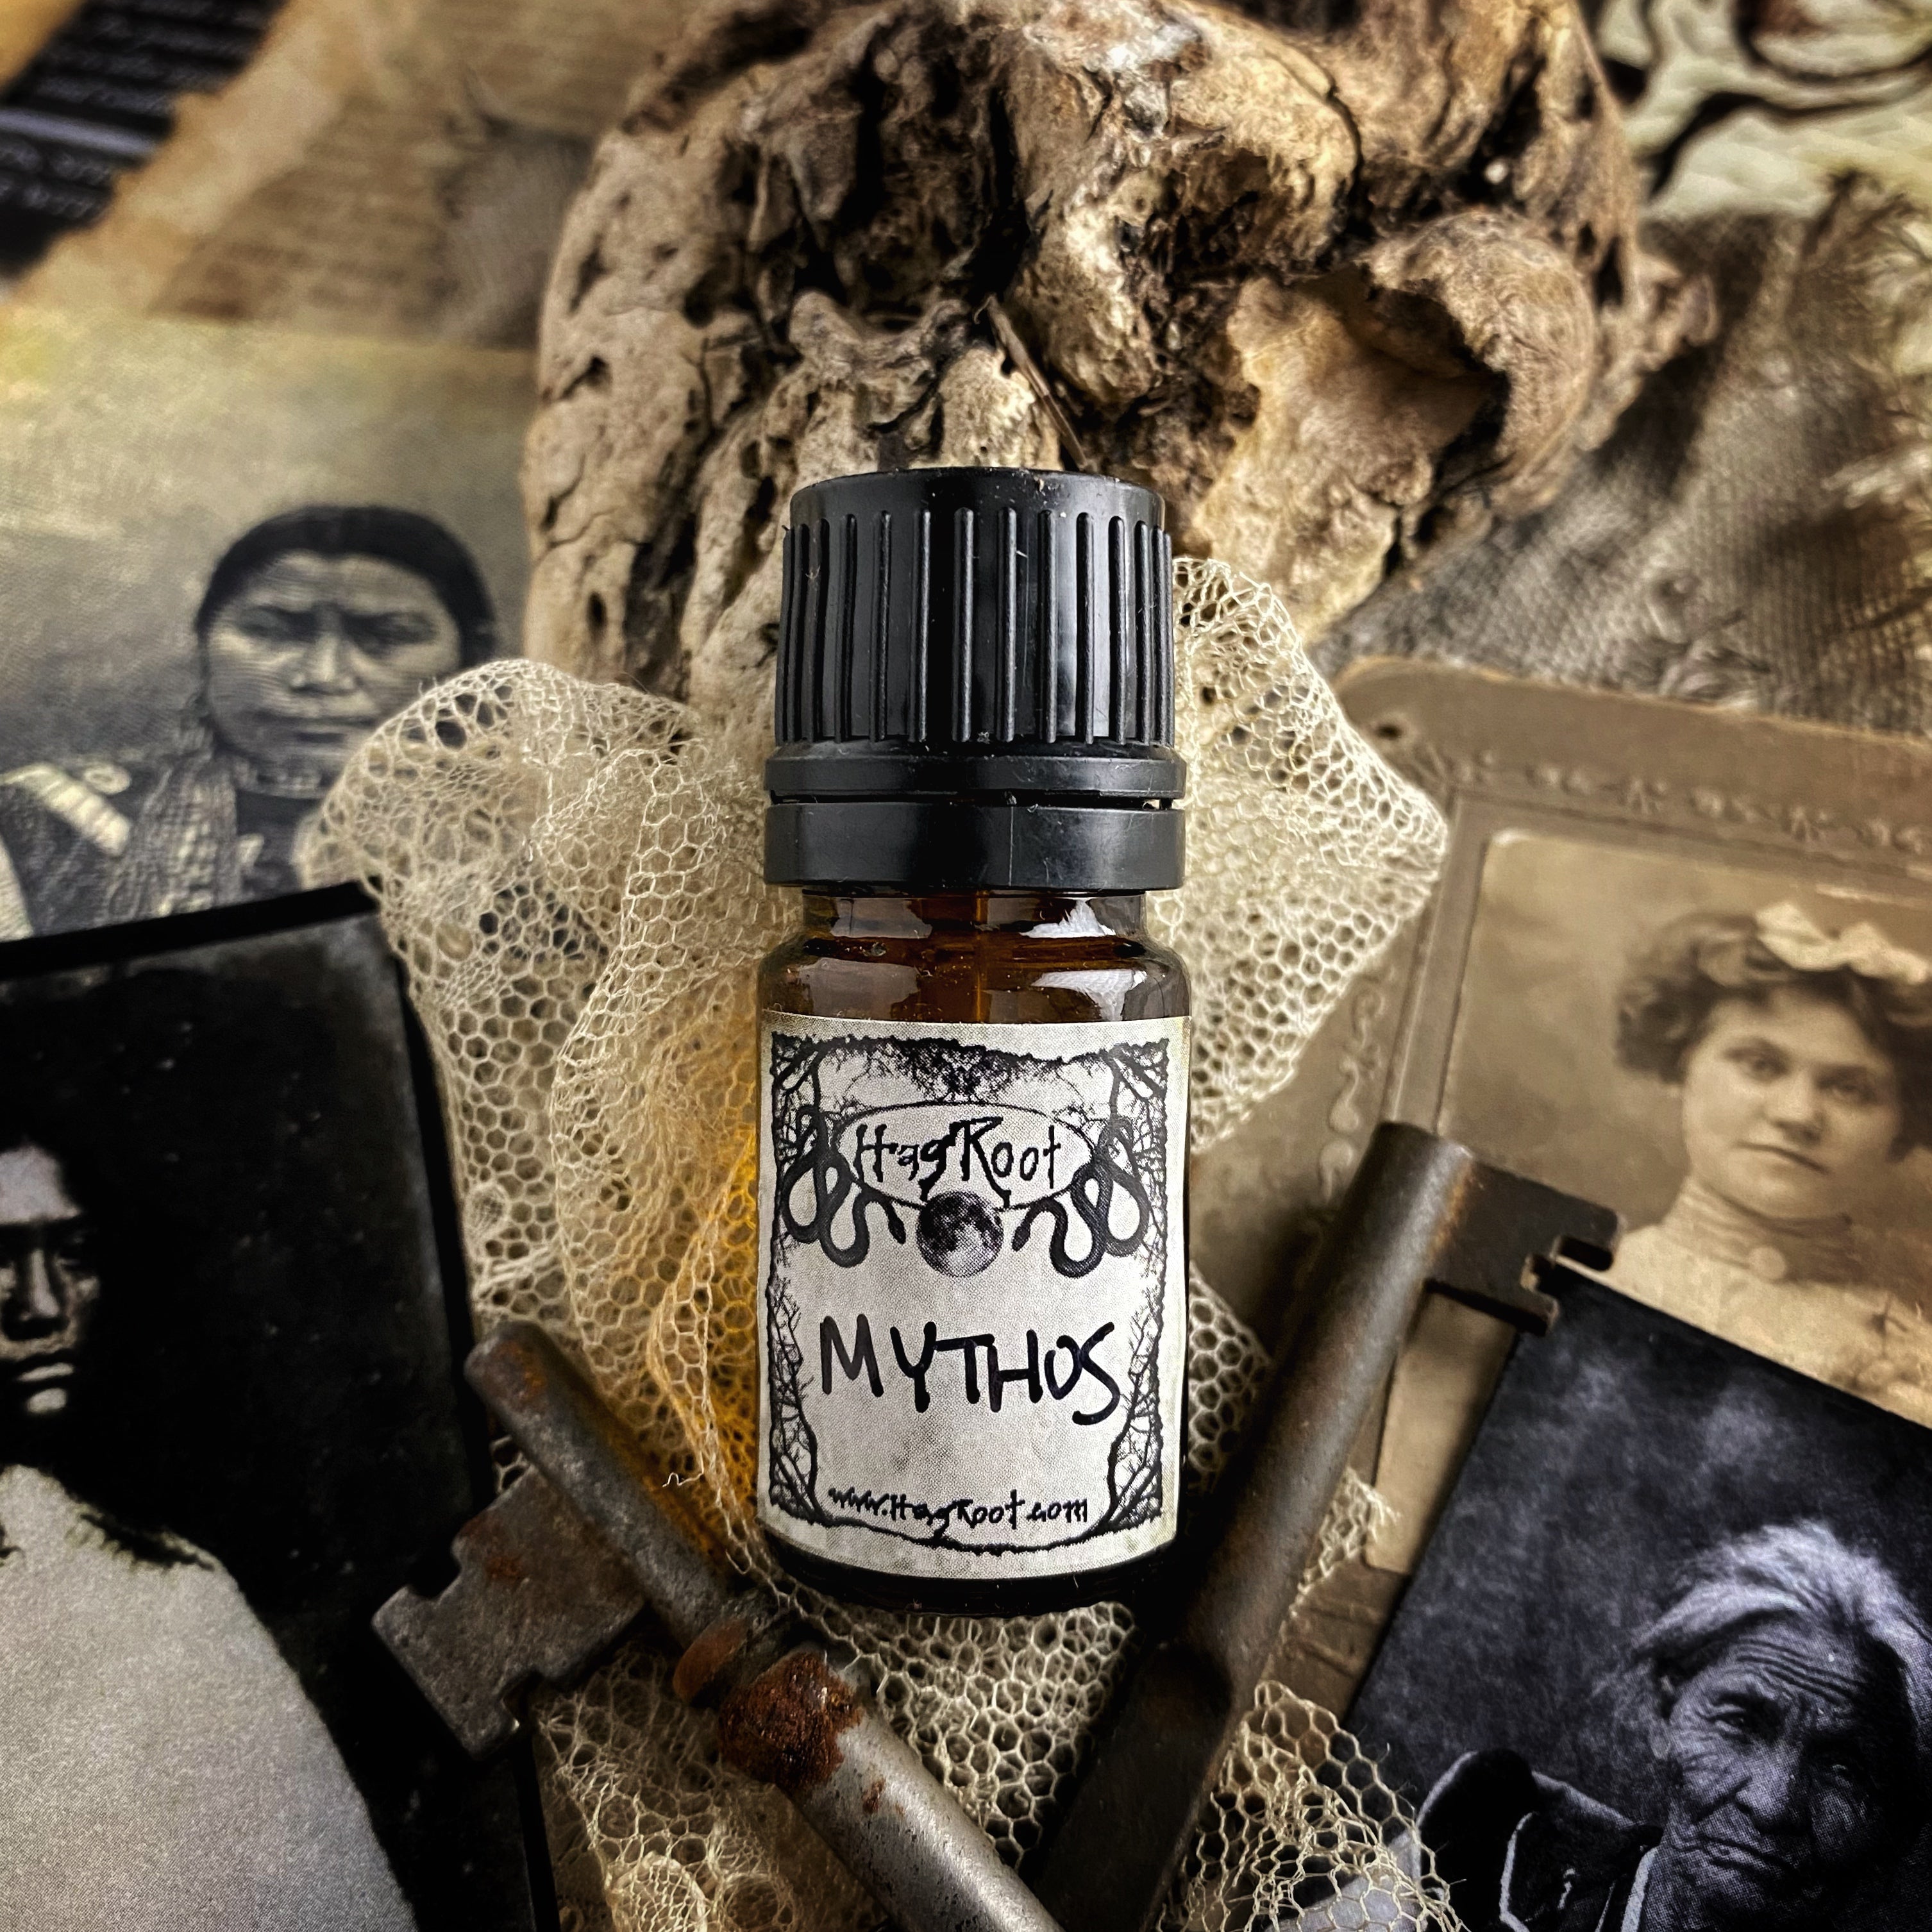 CALYPSO-(Water Lily, Sea Salt, Moss, Cedar, Exotic Spices)-Perfume, Co